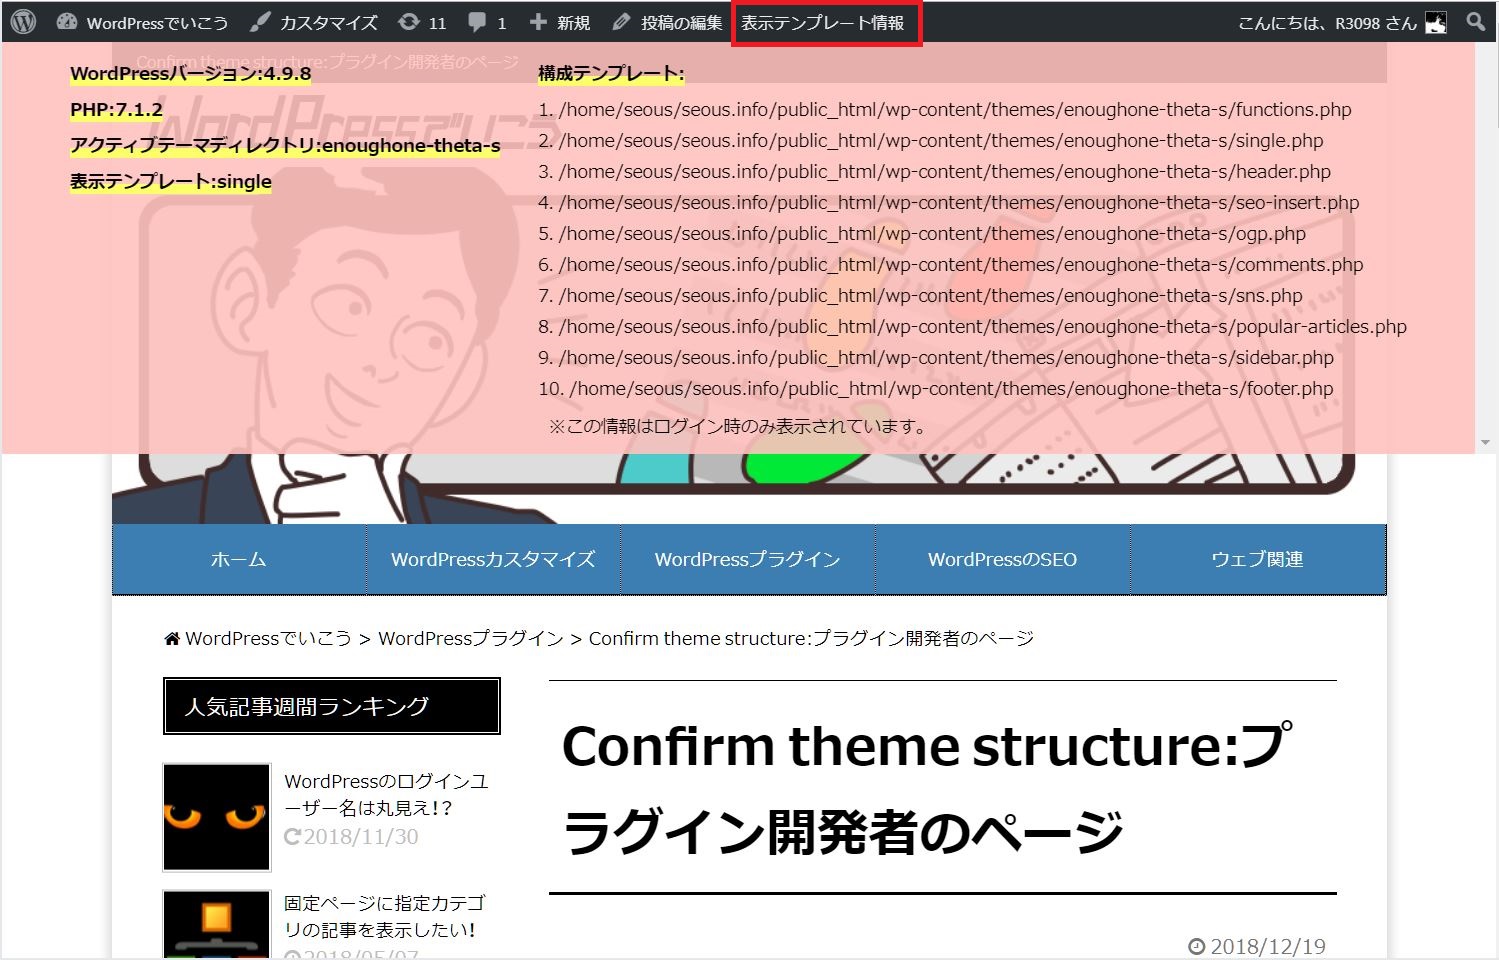 Confirm theme structureの使用方法